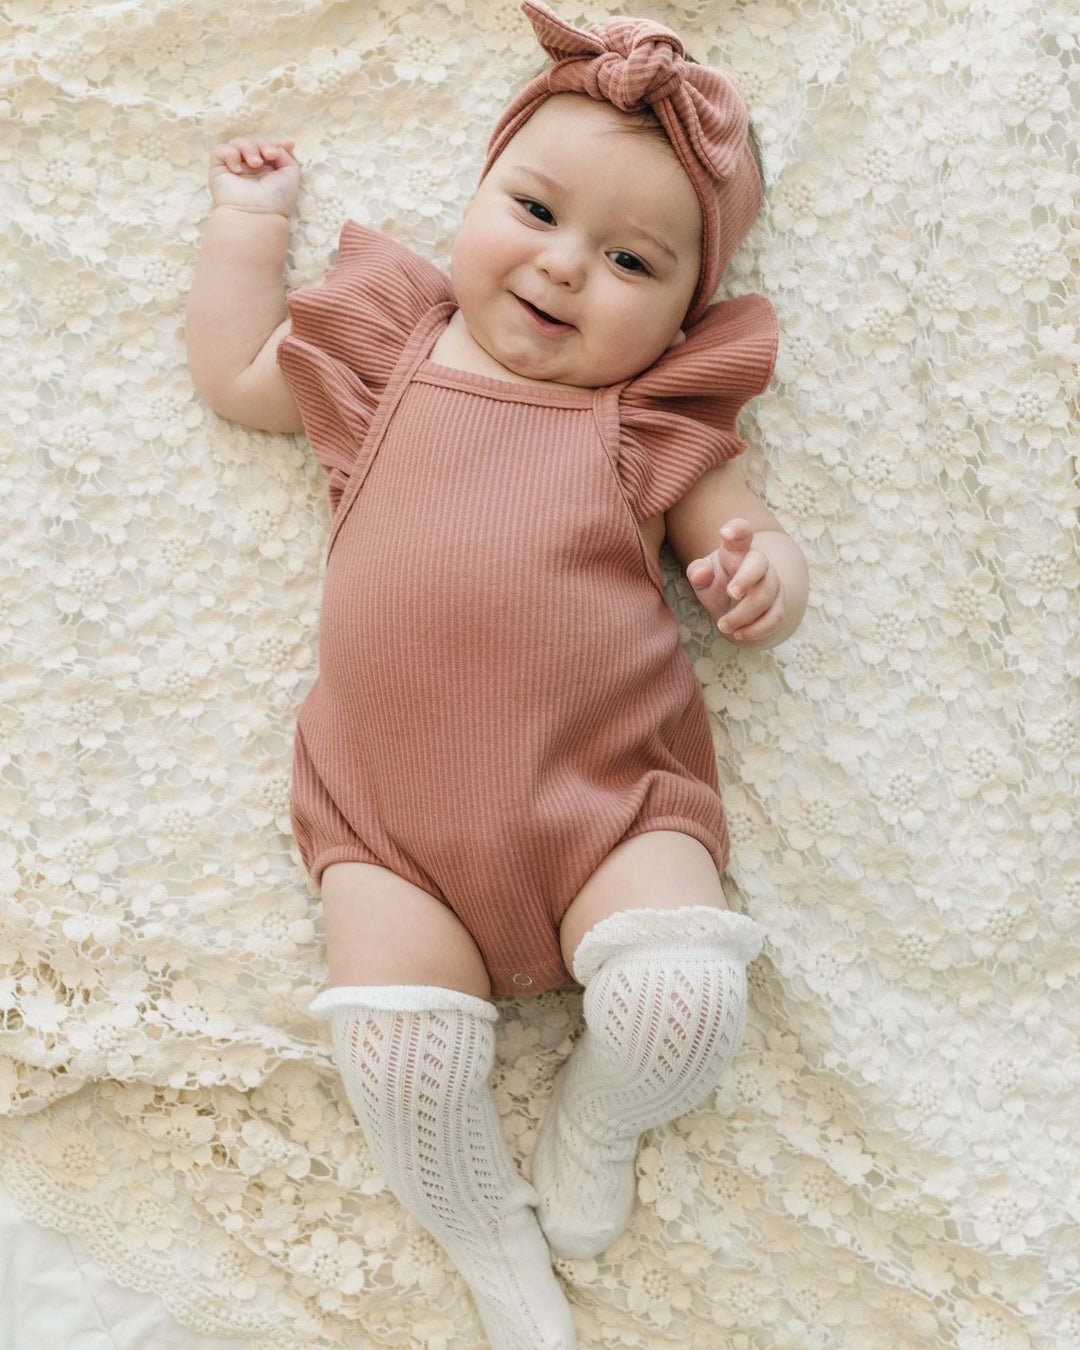 Ruffle Top Knee High Socks - Baby & Toddler Clothing - LUCKY PANDA KIDS